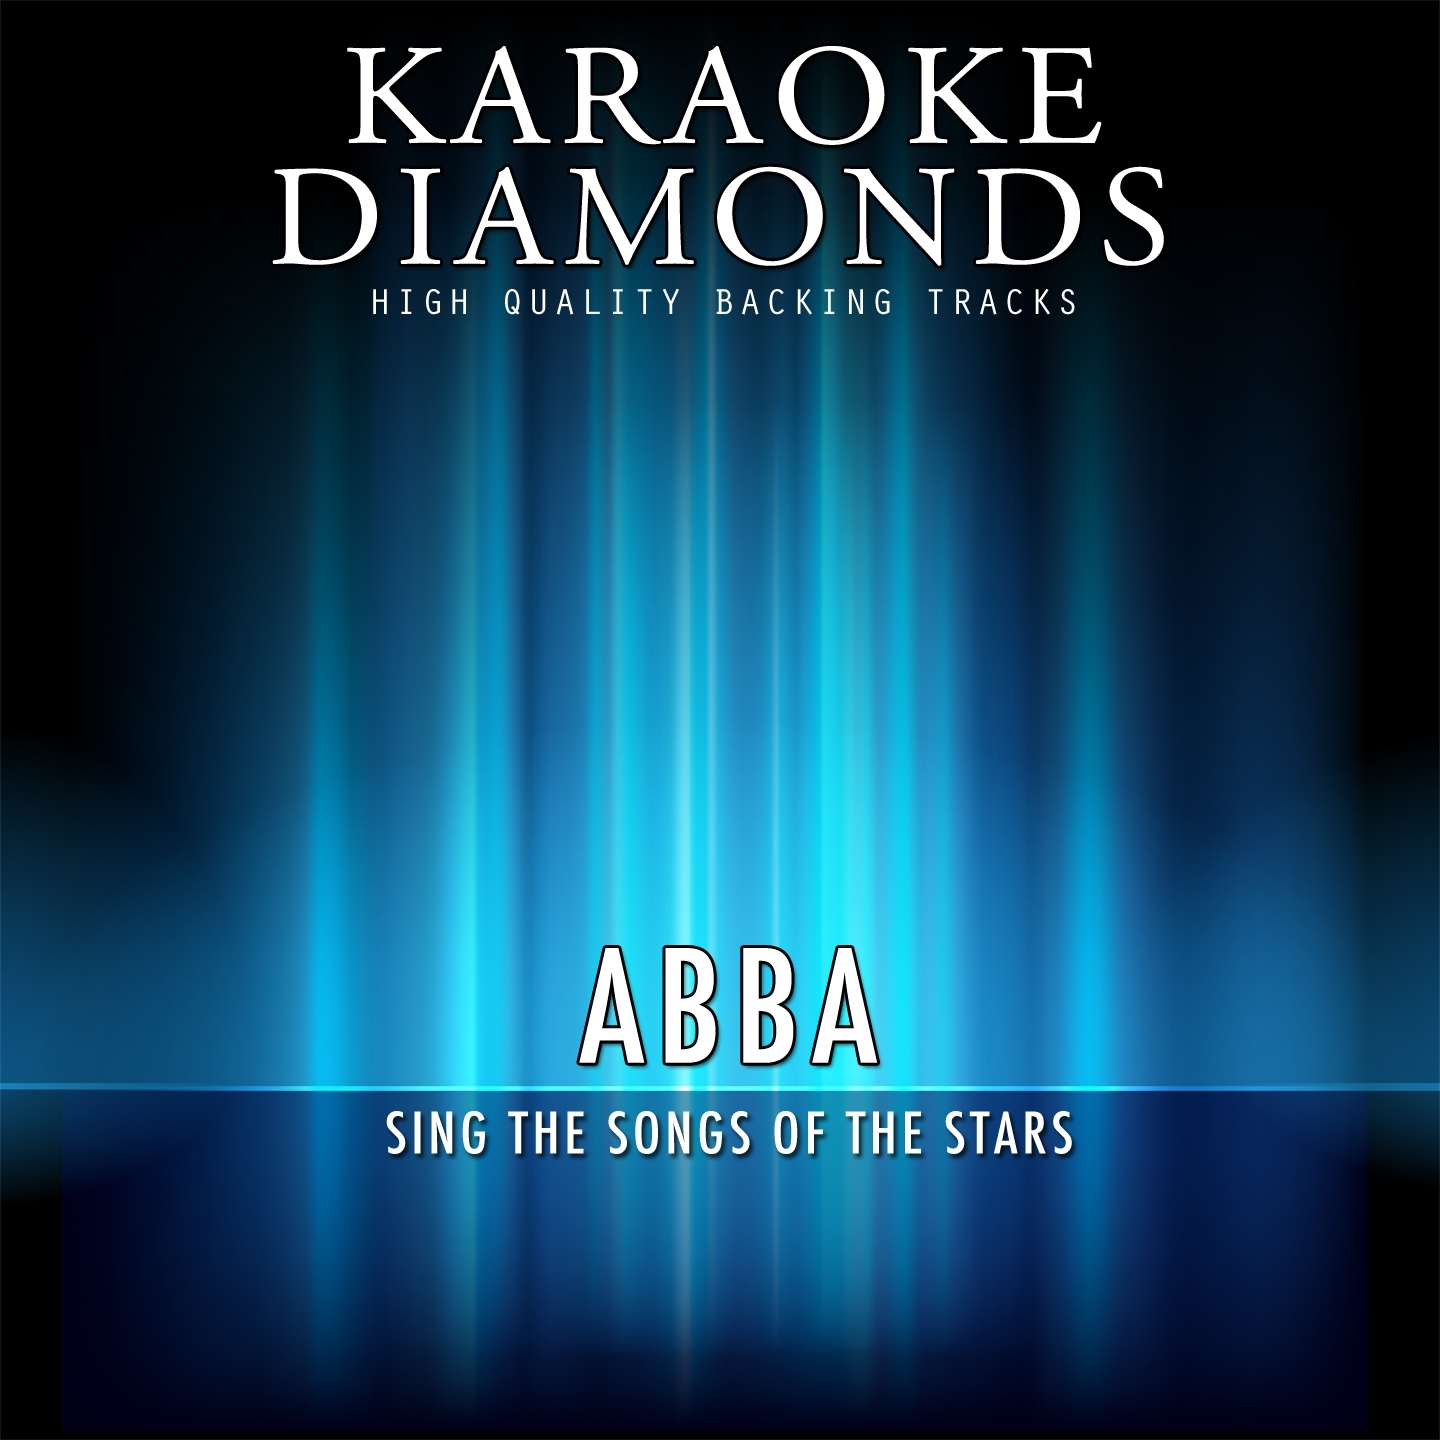 Winner Takes It All (Karaoke Version) (Originally Performed By ABBA)